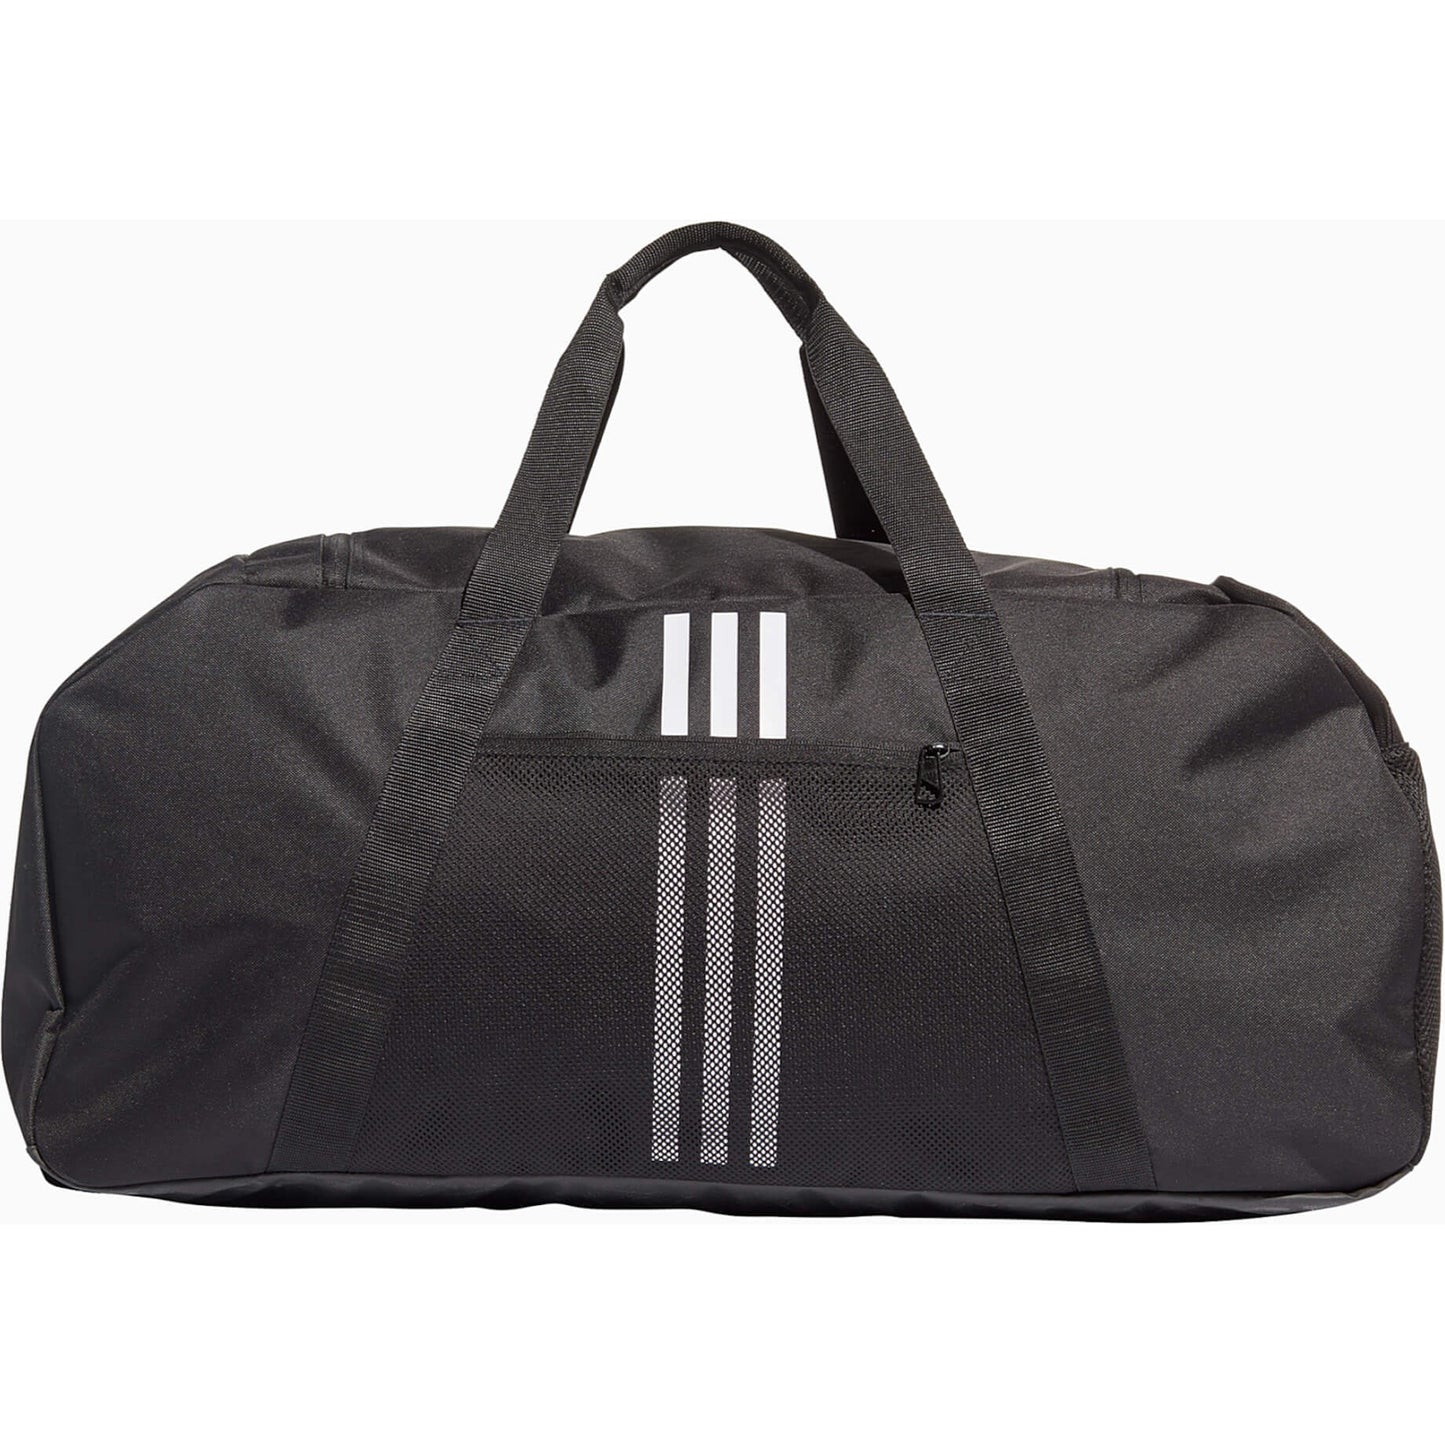 Adidas AG Tiro Duffel bag - Large - Black - 65 cm x 32 cm x 31 cm